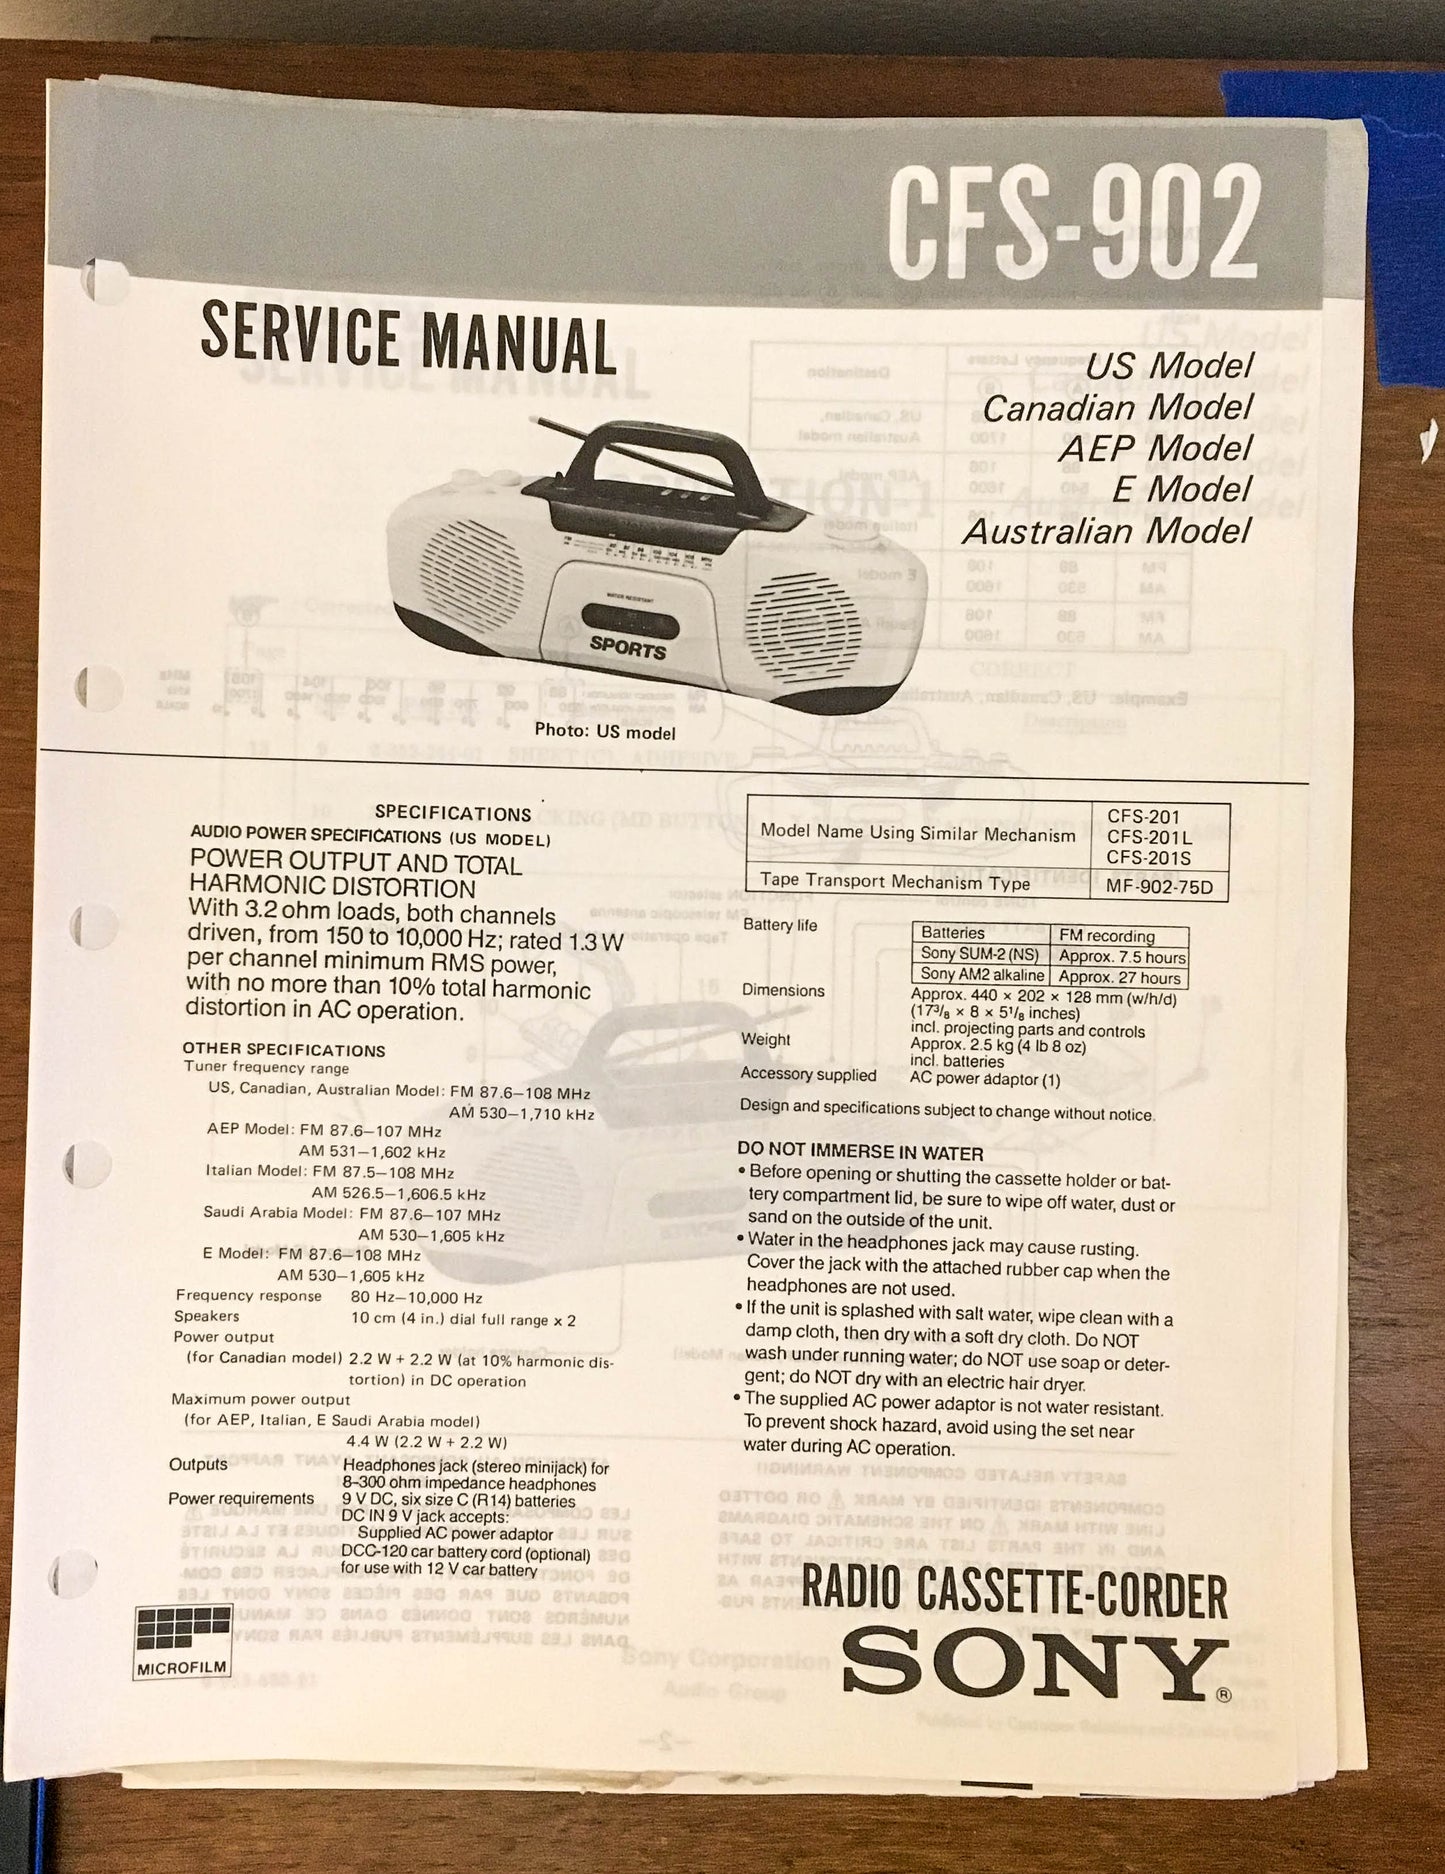 Sony CFS-902 Radio Cassette Recorder / Boombox Service Manual *Original*